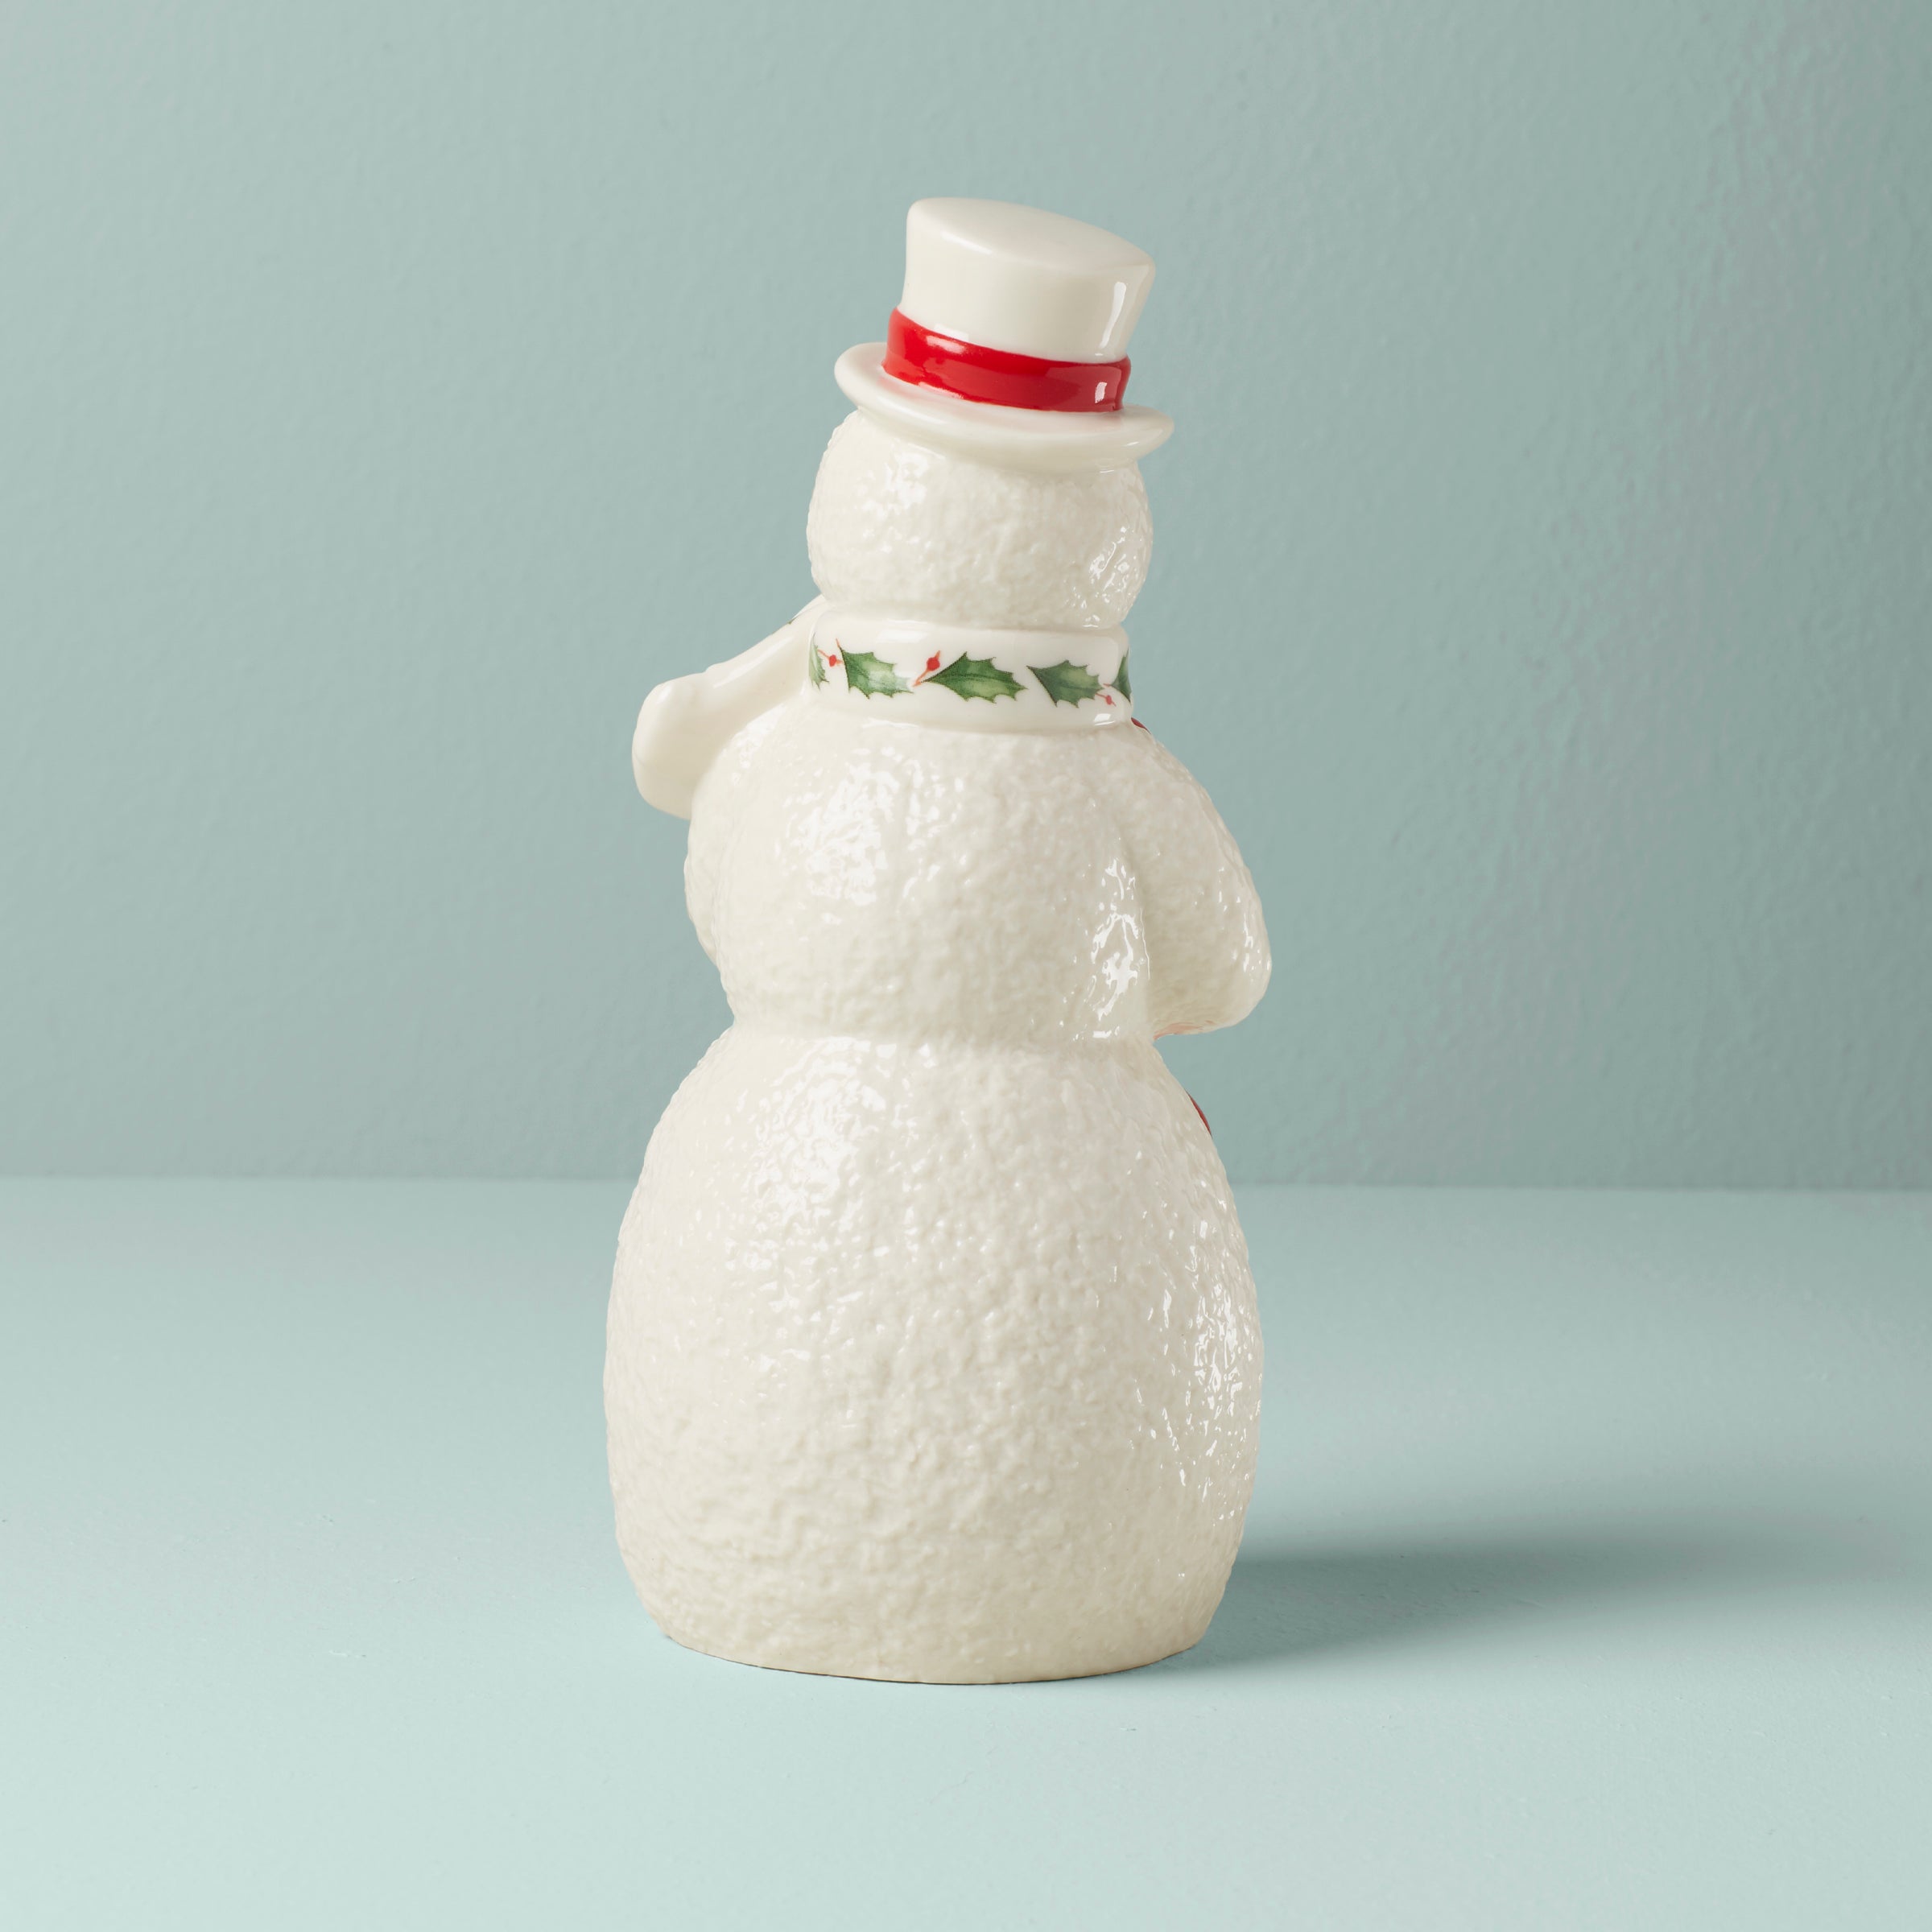 2023 Snowman with Stocking Figurine